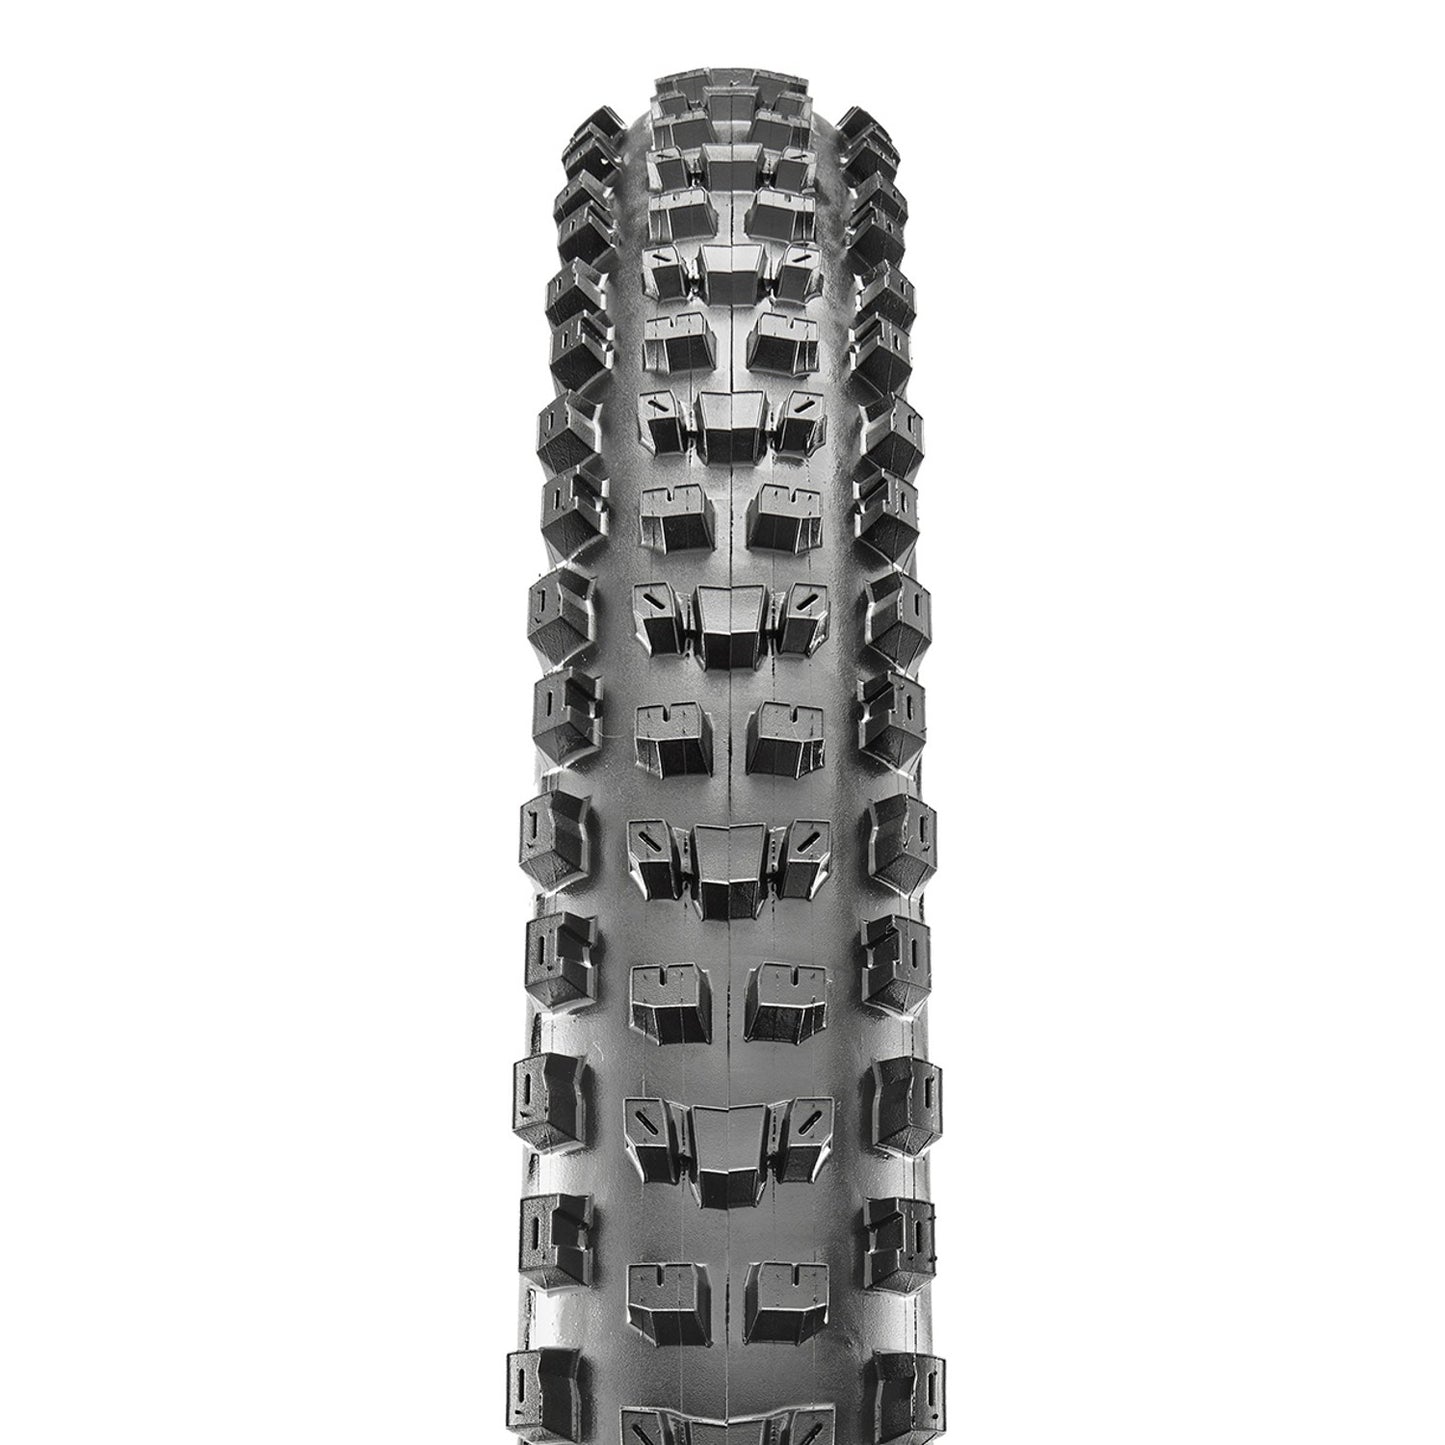 Maxxis Dissector Trail / Enduro / Downhill MTB Tire 27.5 EXO Tubeless Ready - Black